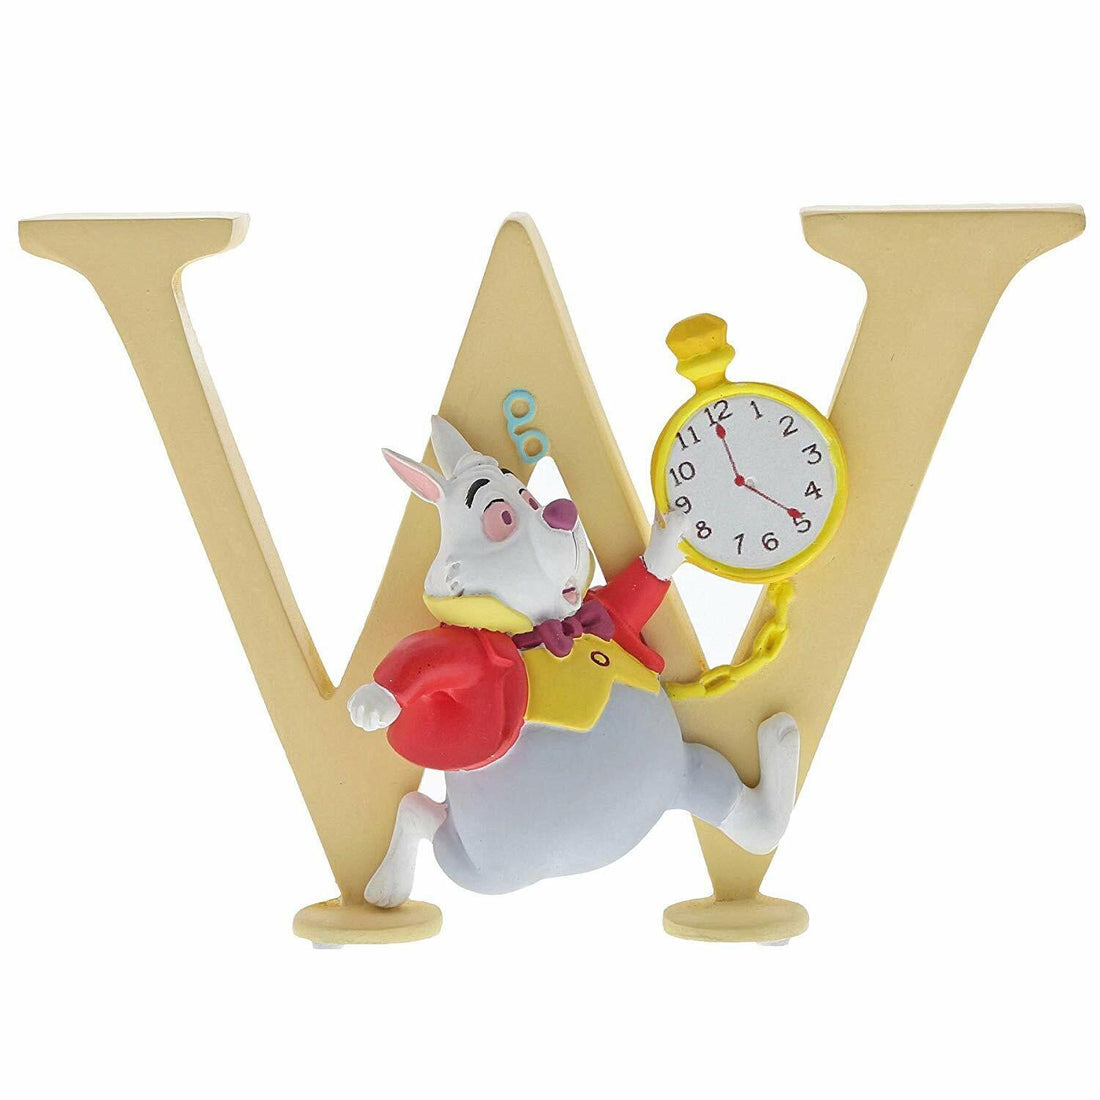 Disney Enchanting Collection Alphabet Letter Figurines - Choose a Letter! - W - White Rabbit